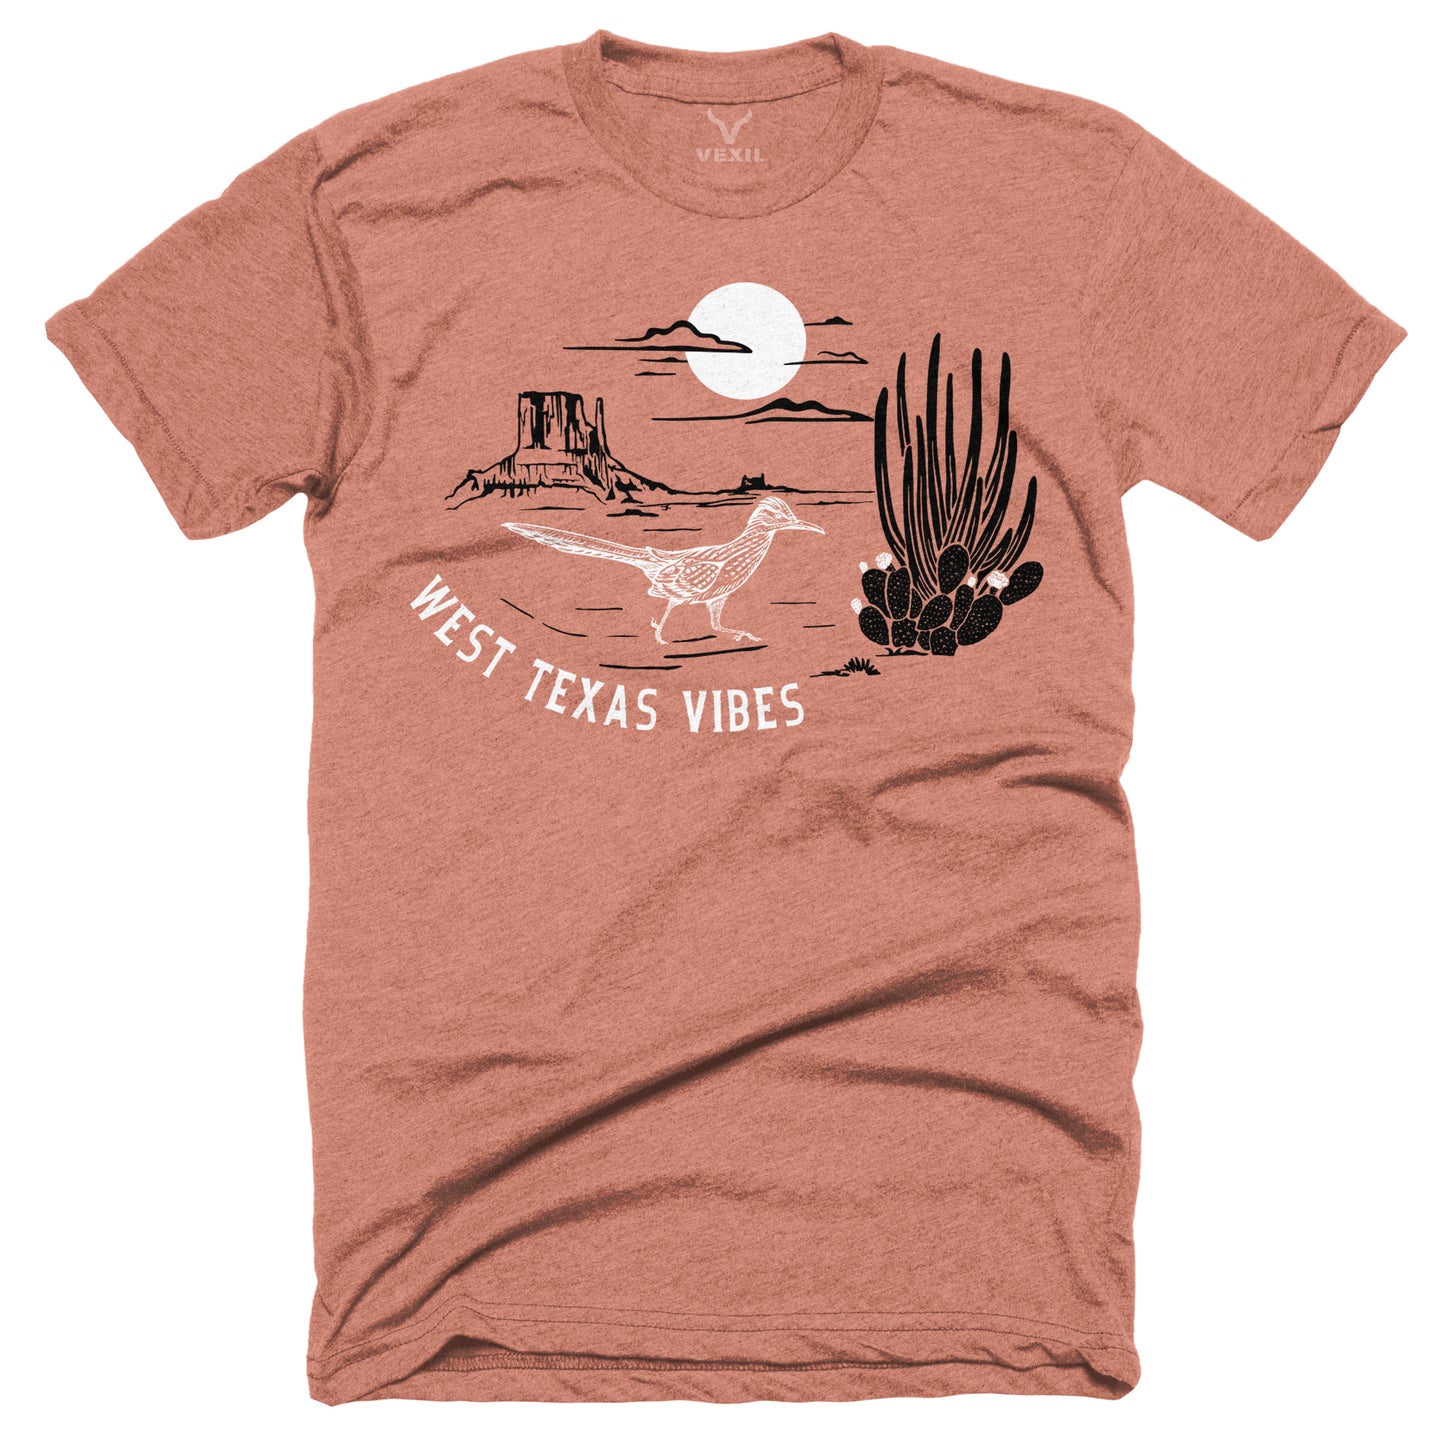 West Texas Vibes - Salmon